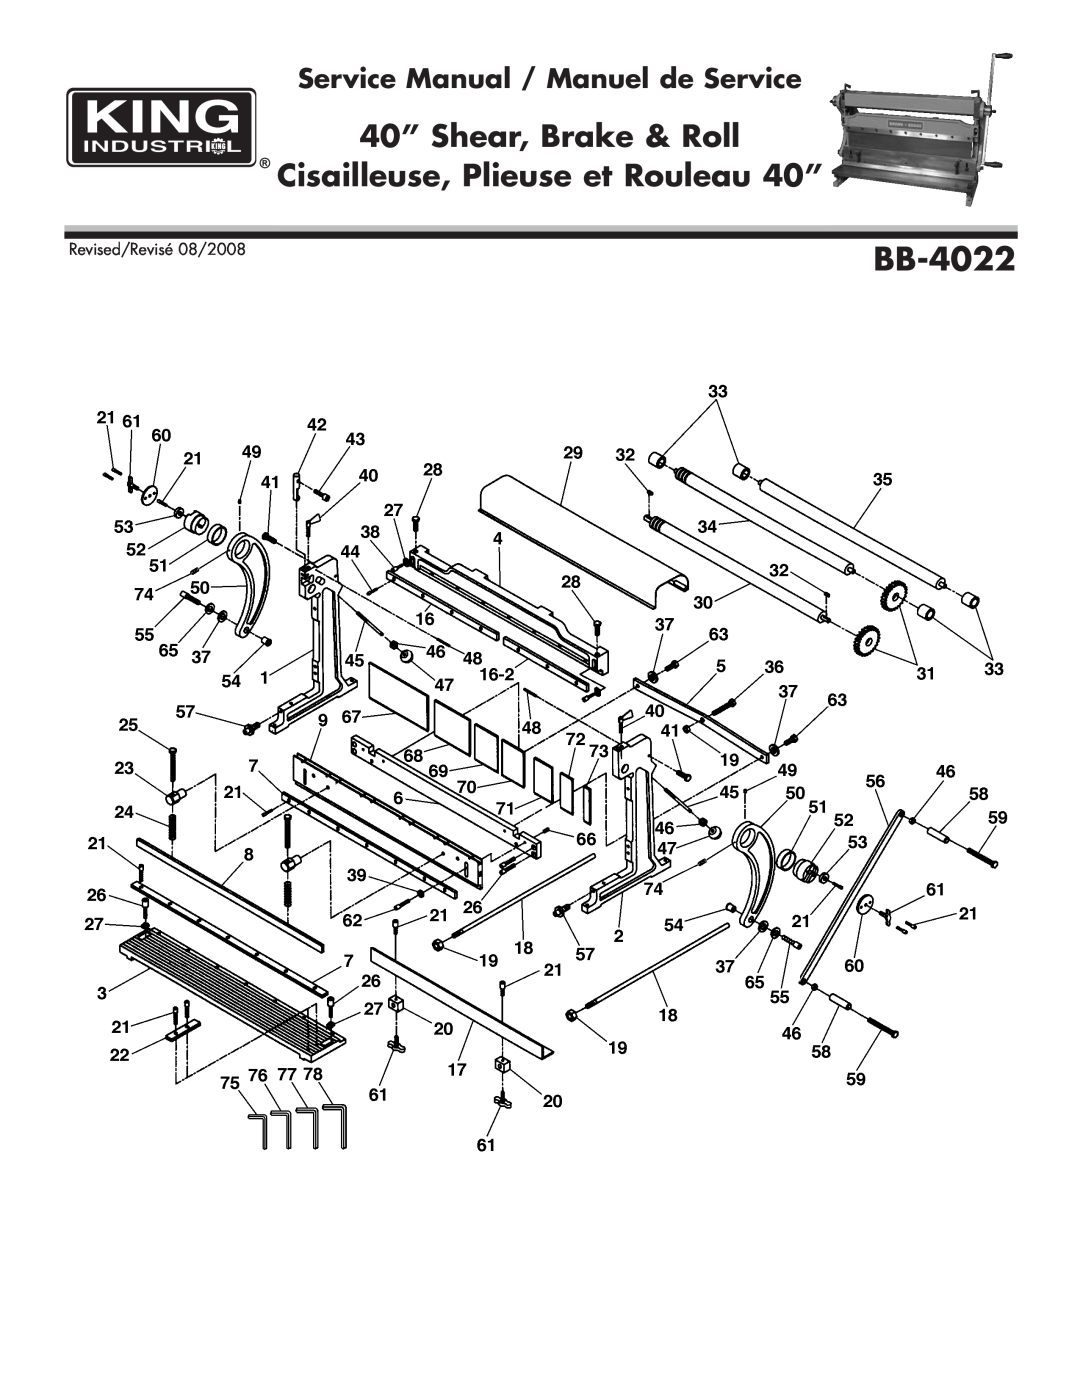 King Canada BB-4022 service manual 40” Shear, Brake & Roll Cisailleuse, Plieuse et Rouleau 40”, Revised/Revisé 08/2008 